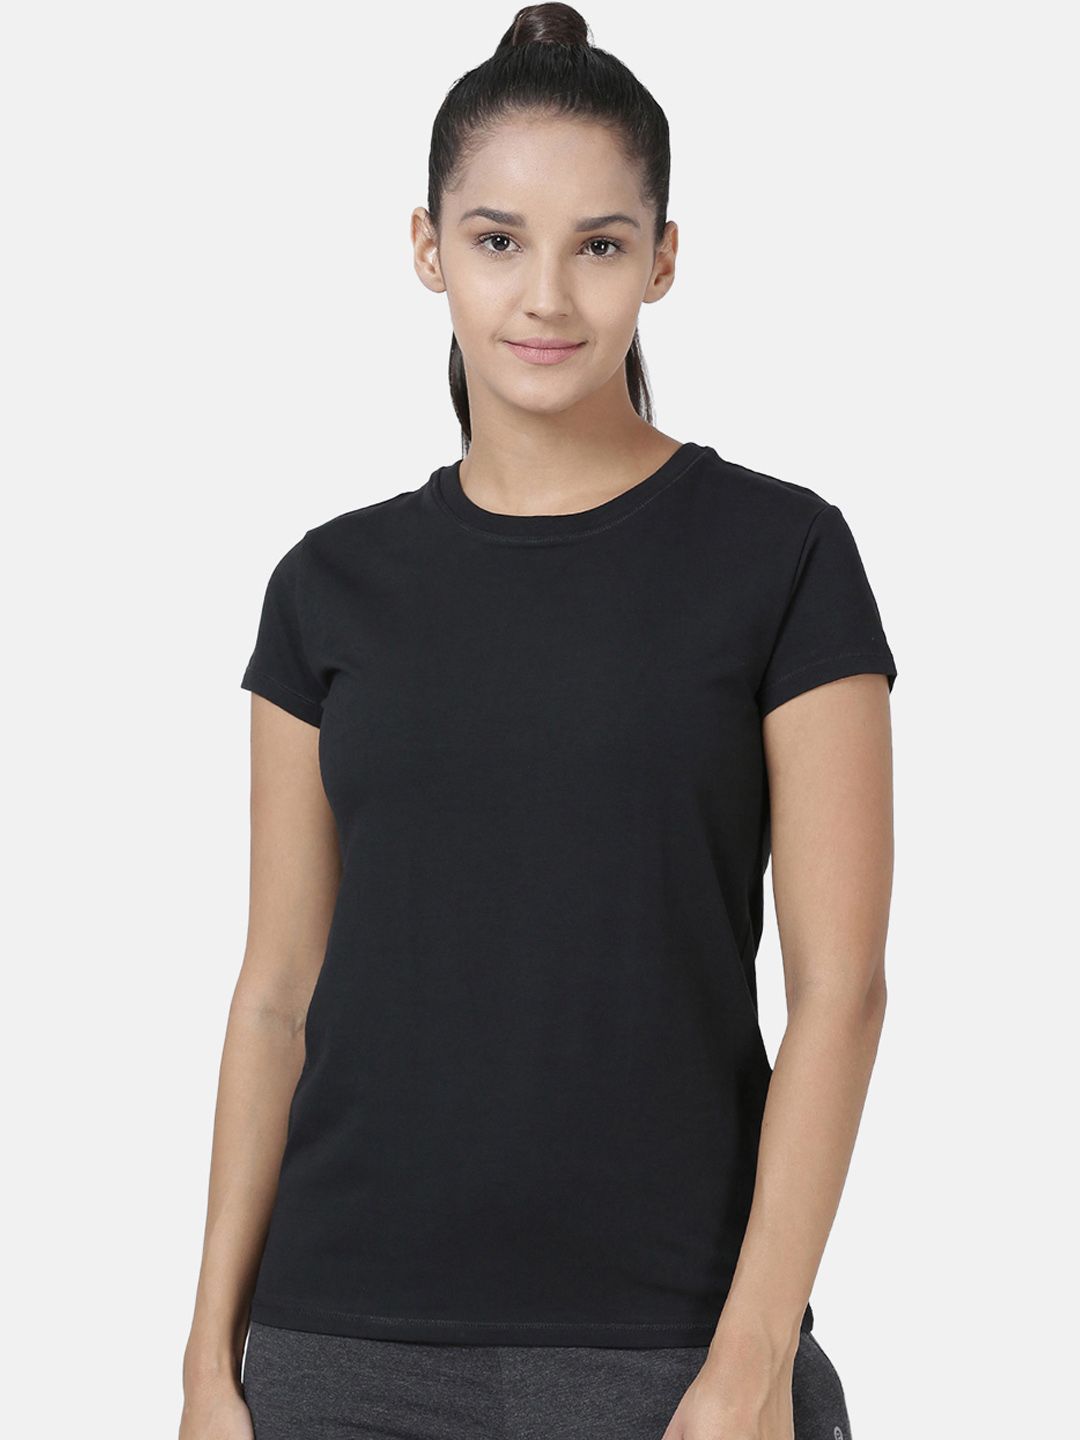 Enamor Women Black Slim Fit Crew Round Neck T-Shirt Price in India